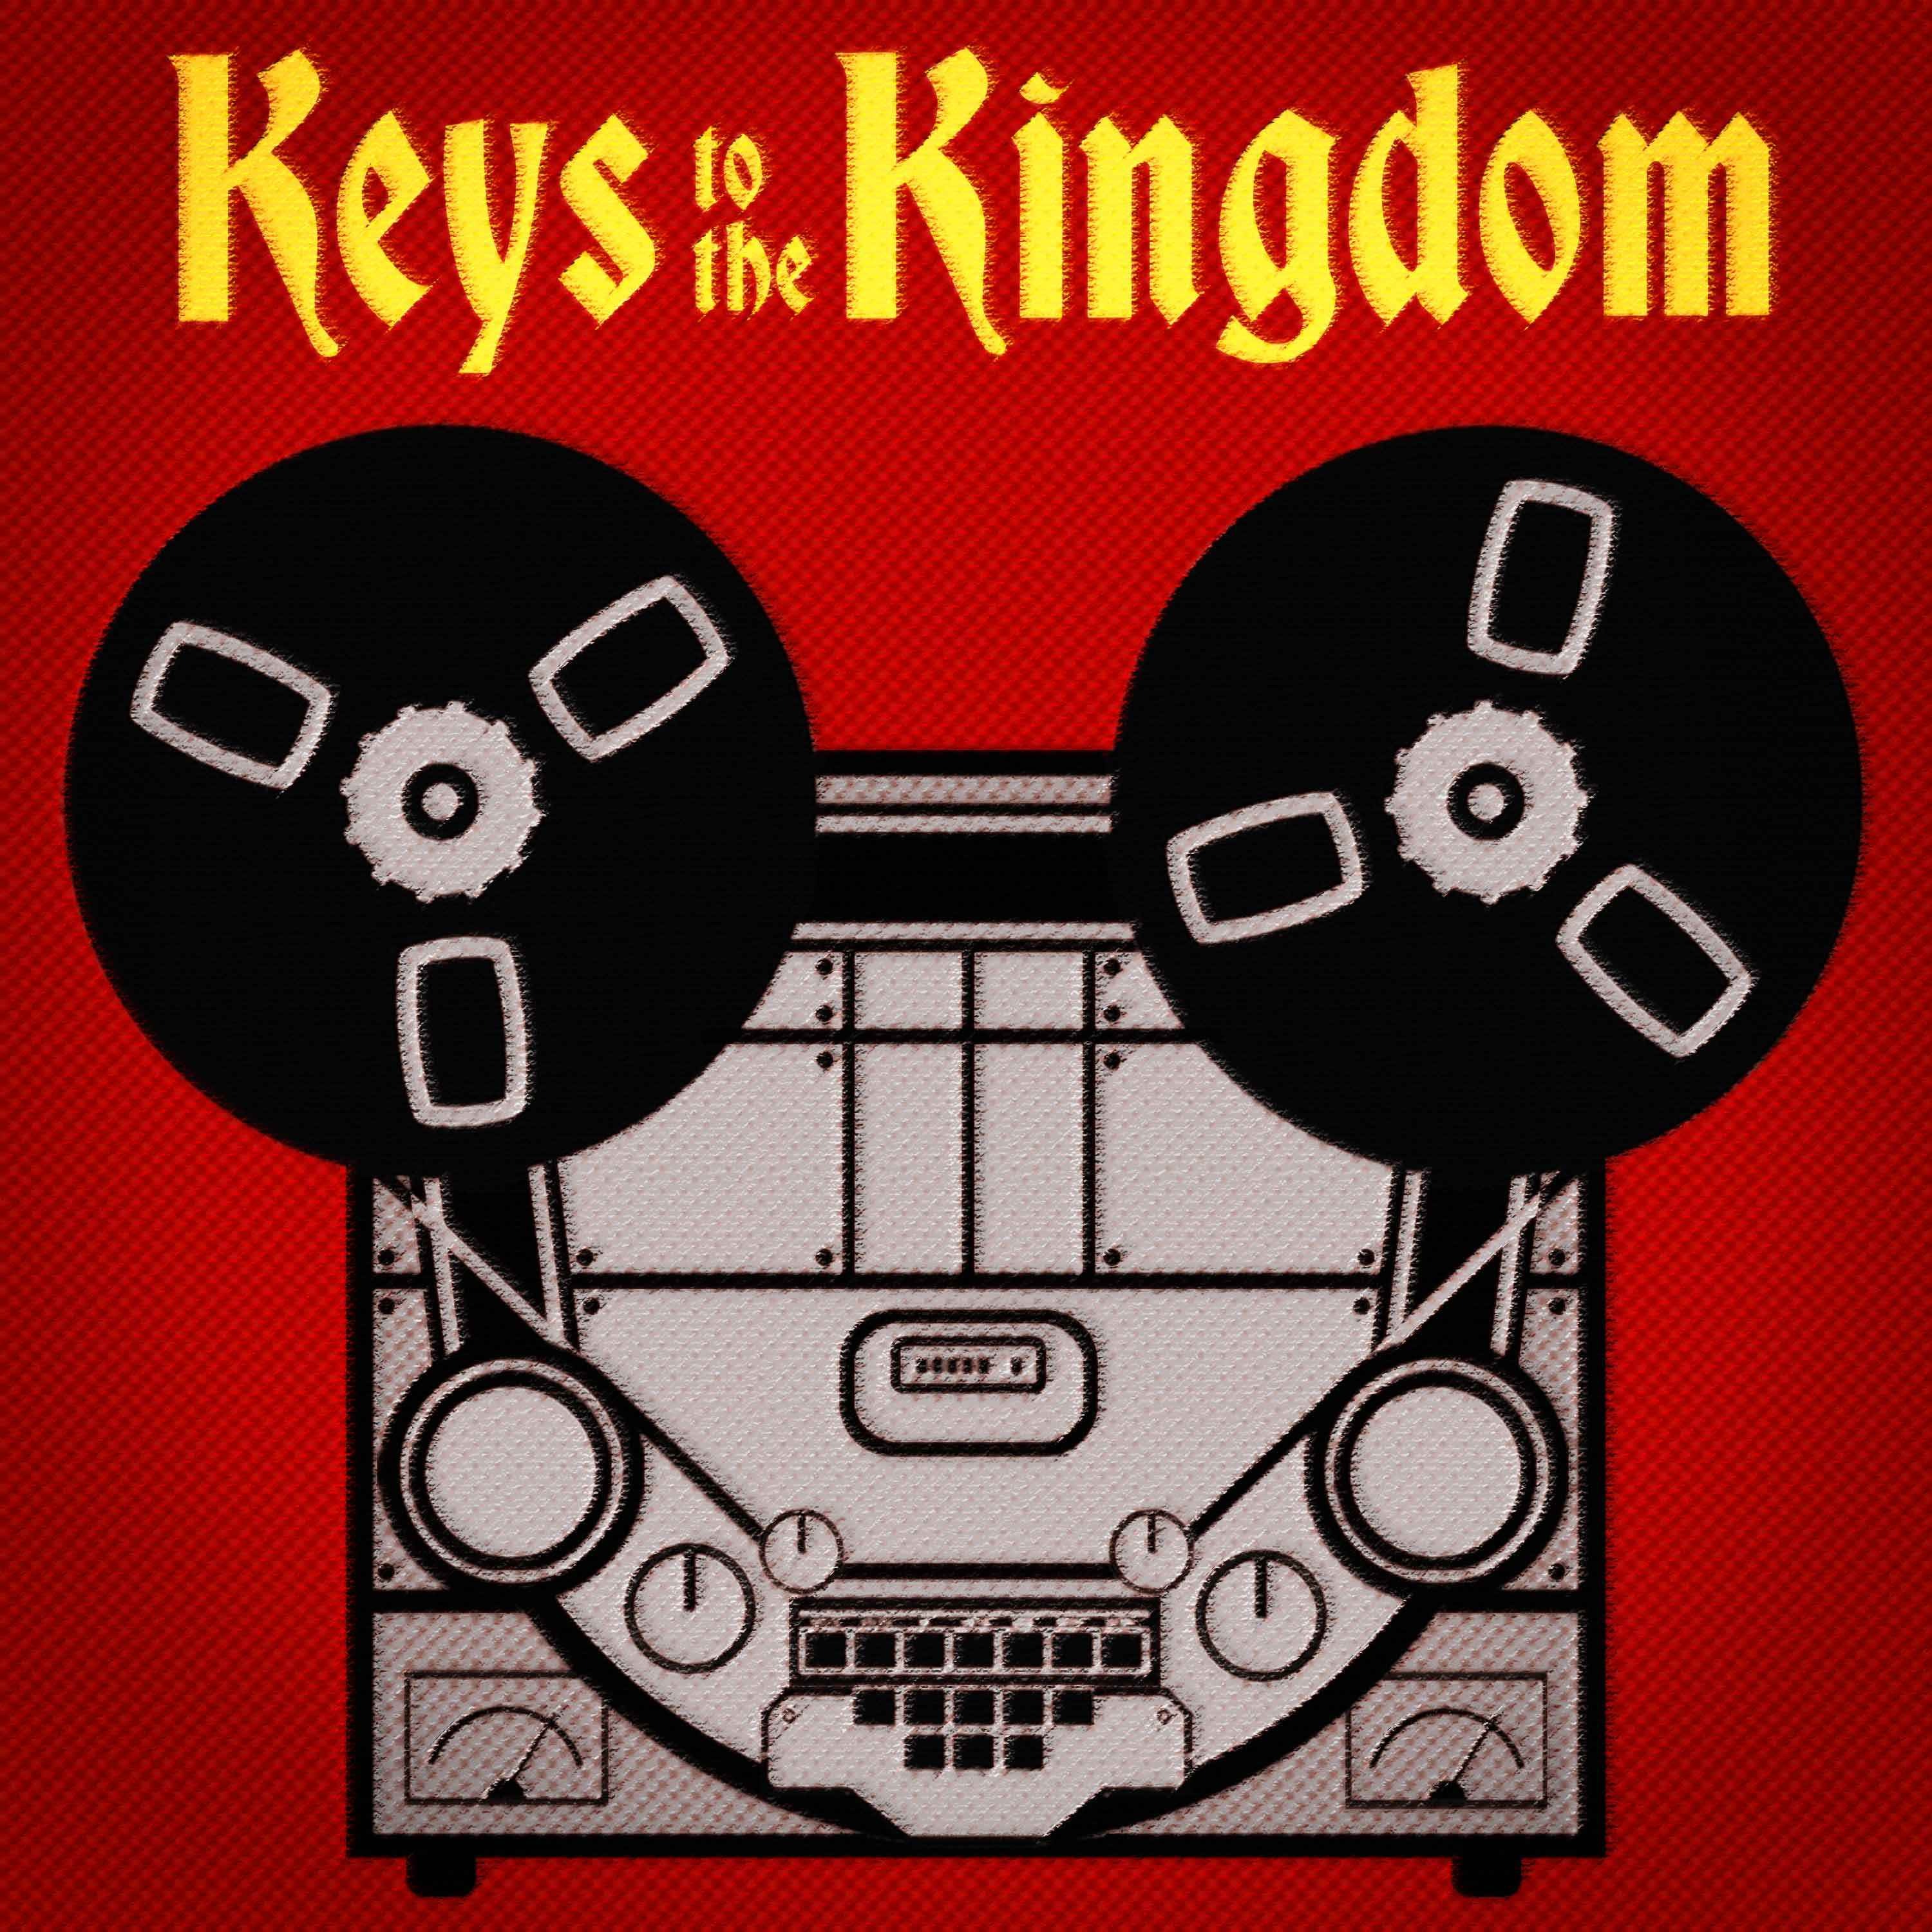 Keys To The Kingdom podcast show image